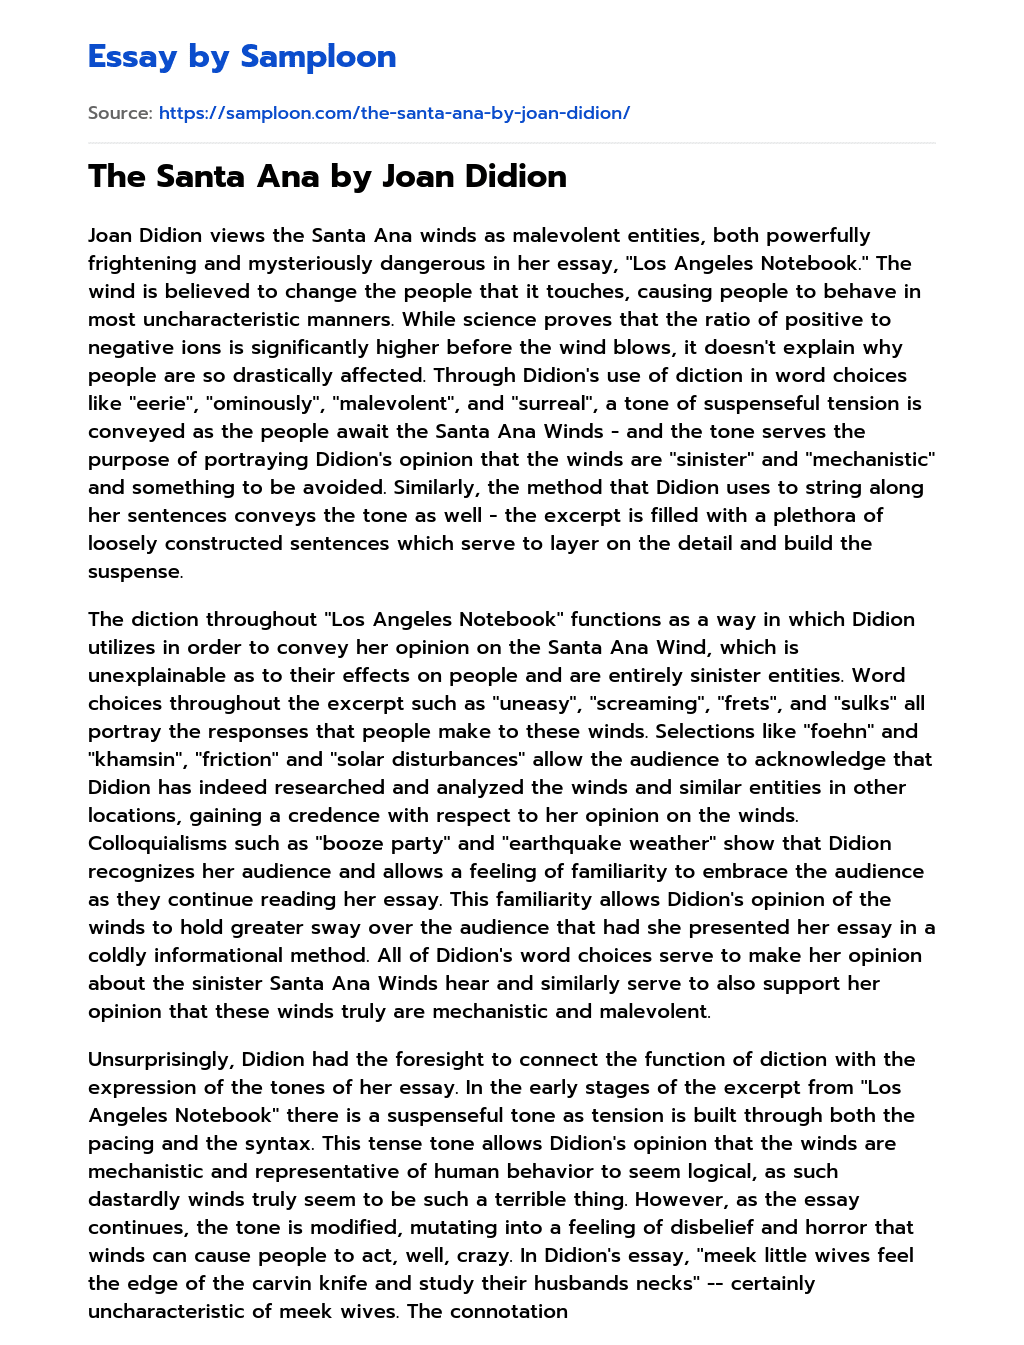 The Santa Ana by Joan Didion essay